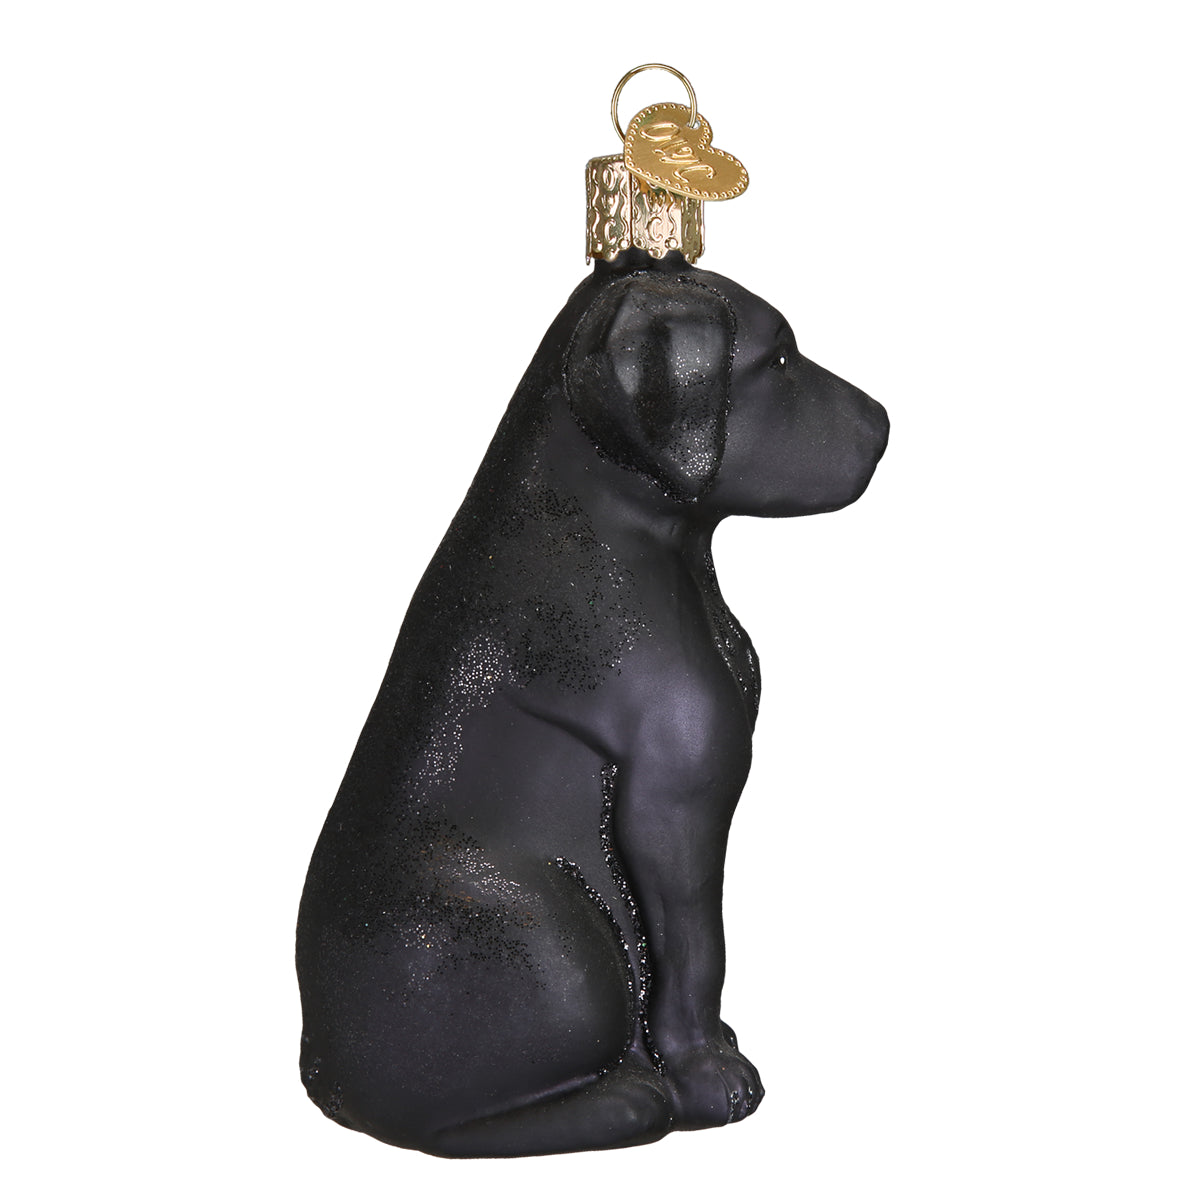 Black Labrador Ornament